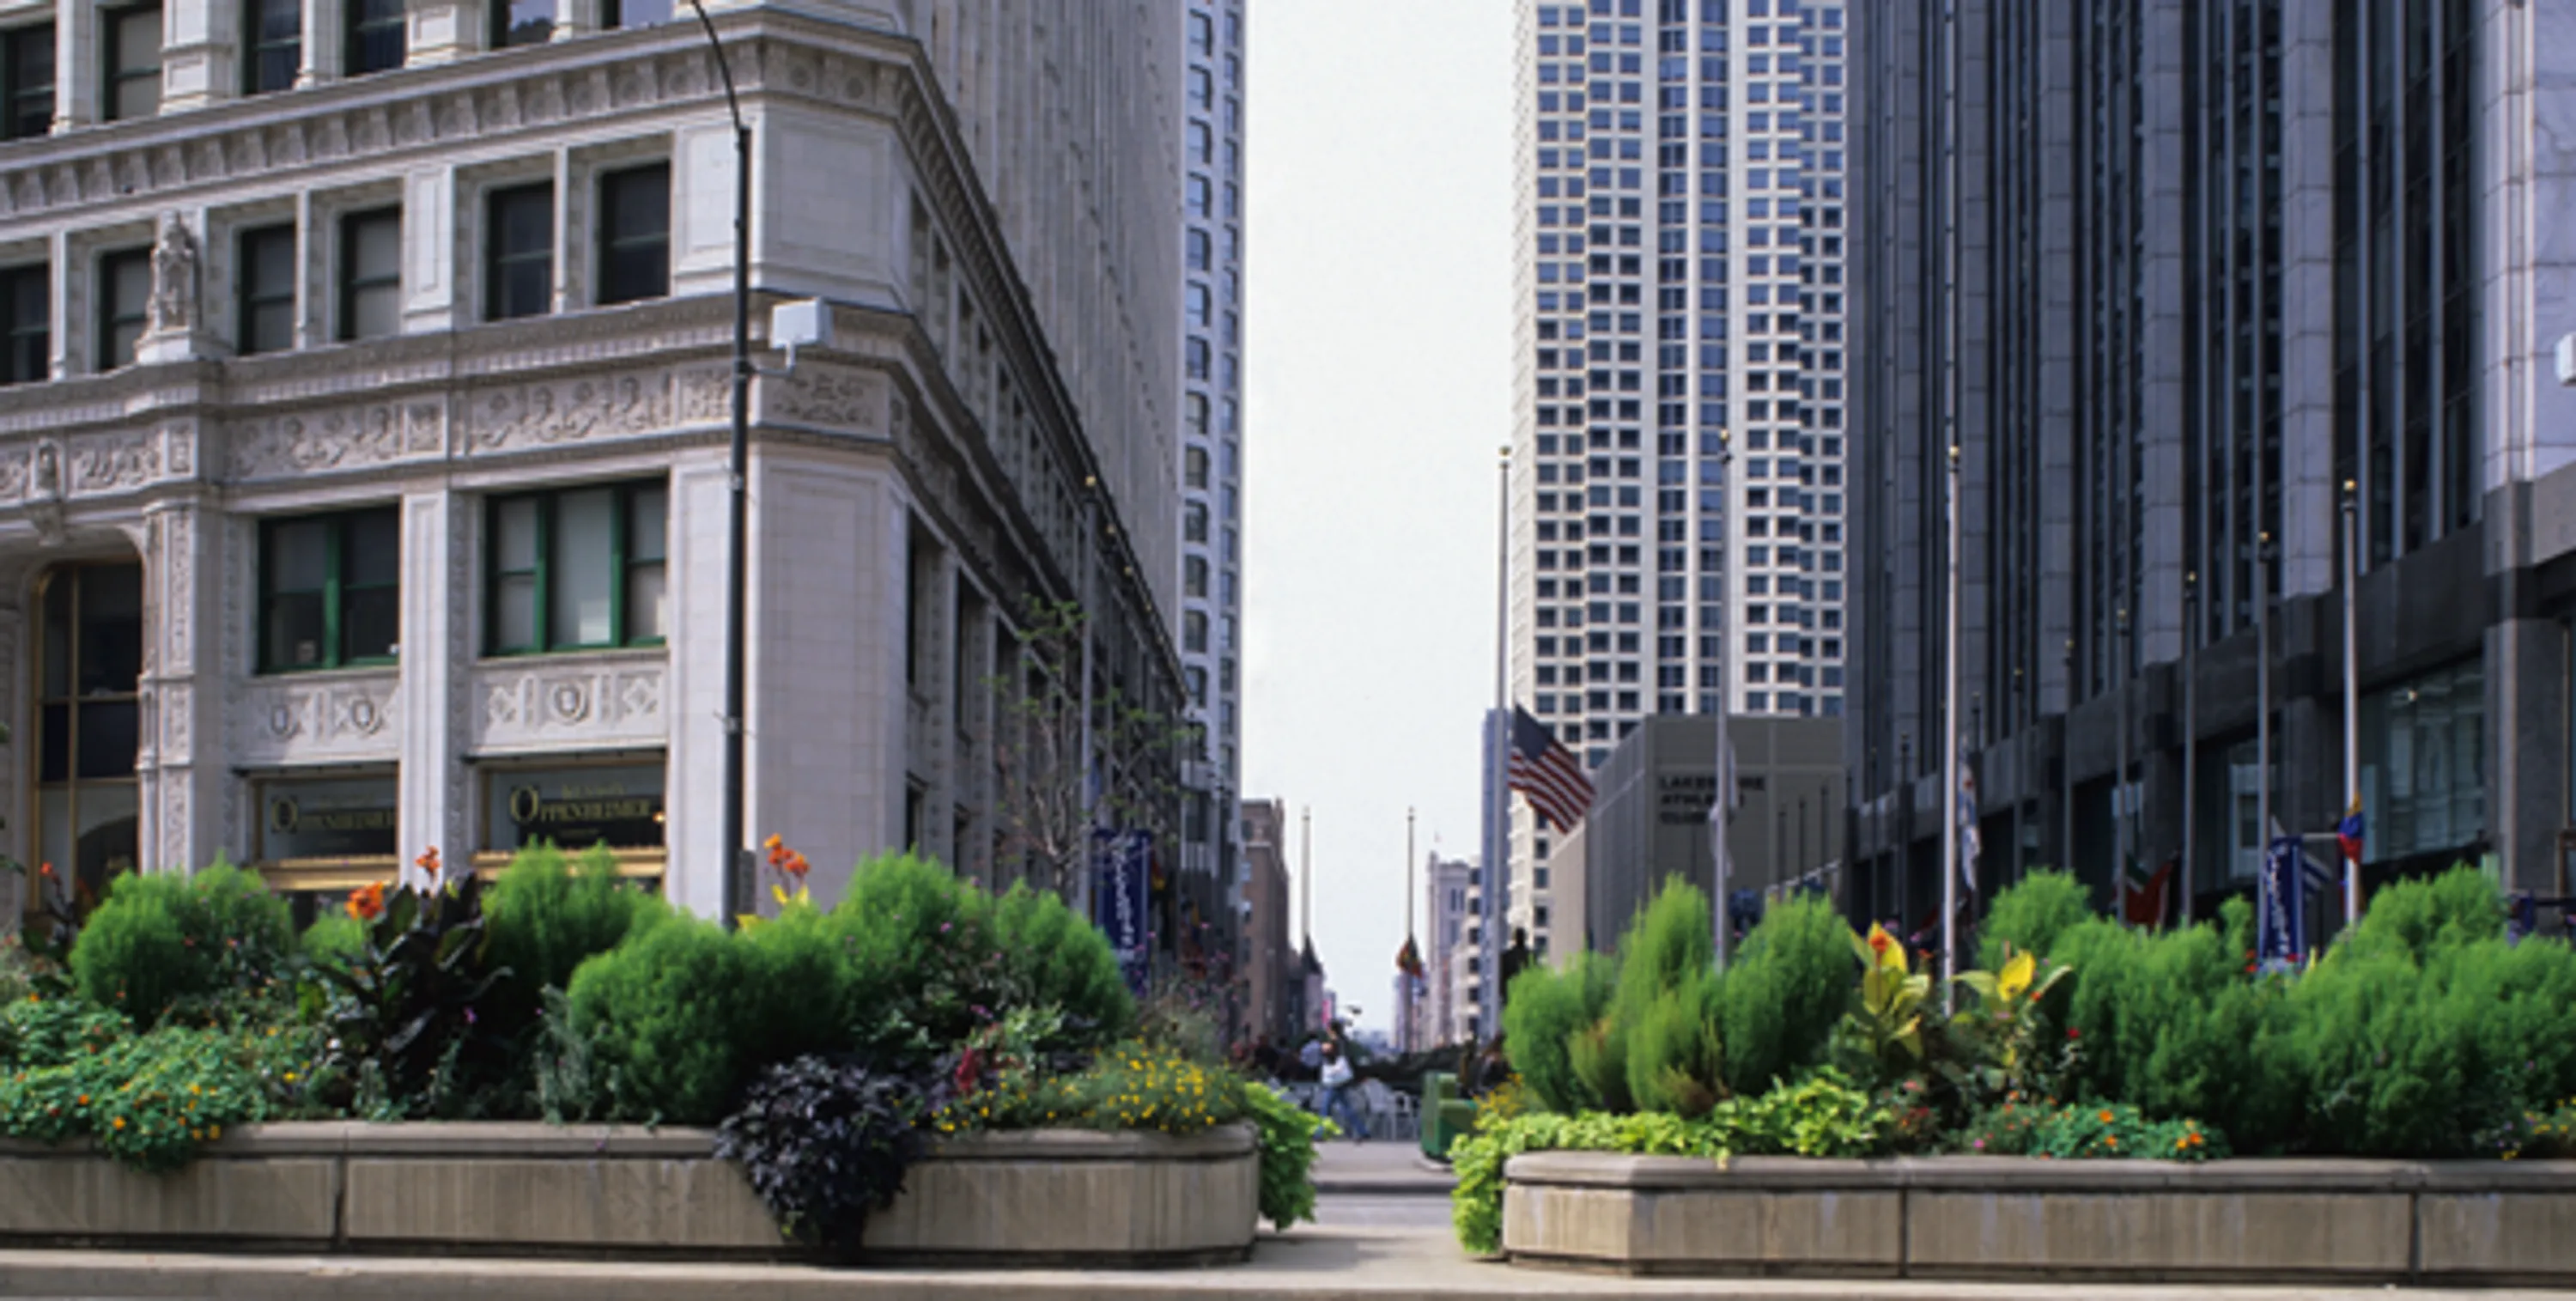 3 downtown chicago when designing planters blog ideas hoerrschaudt